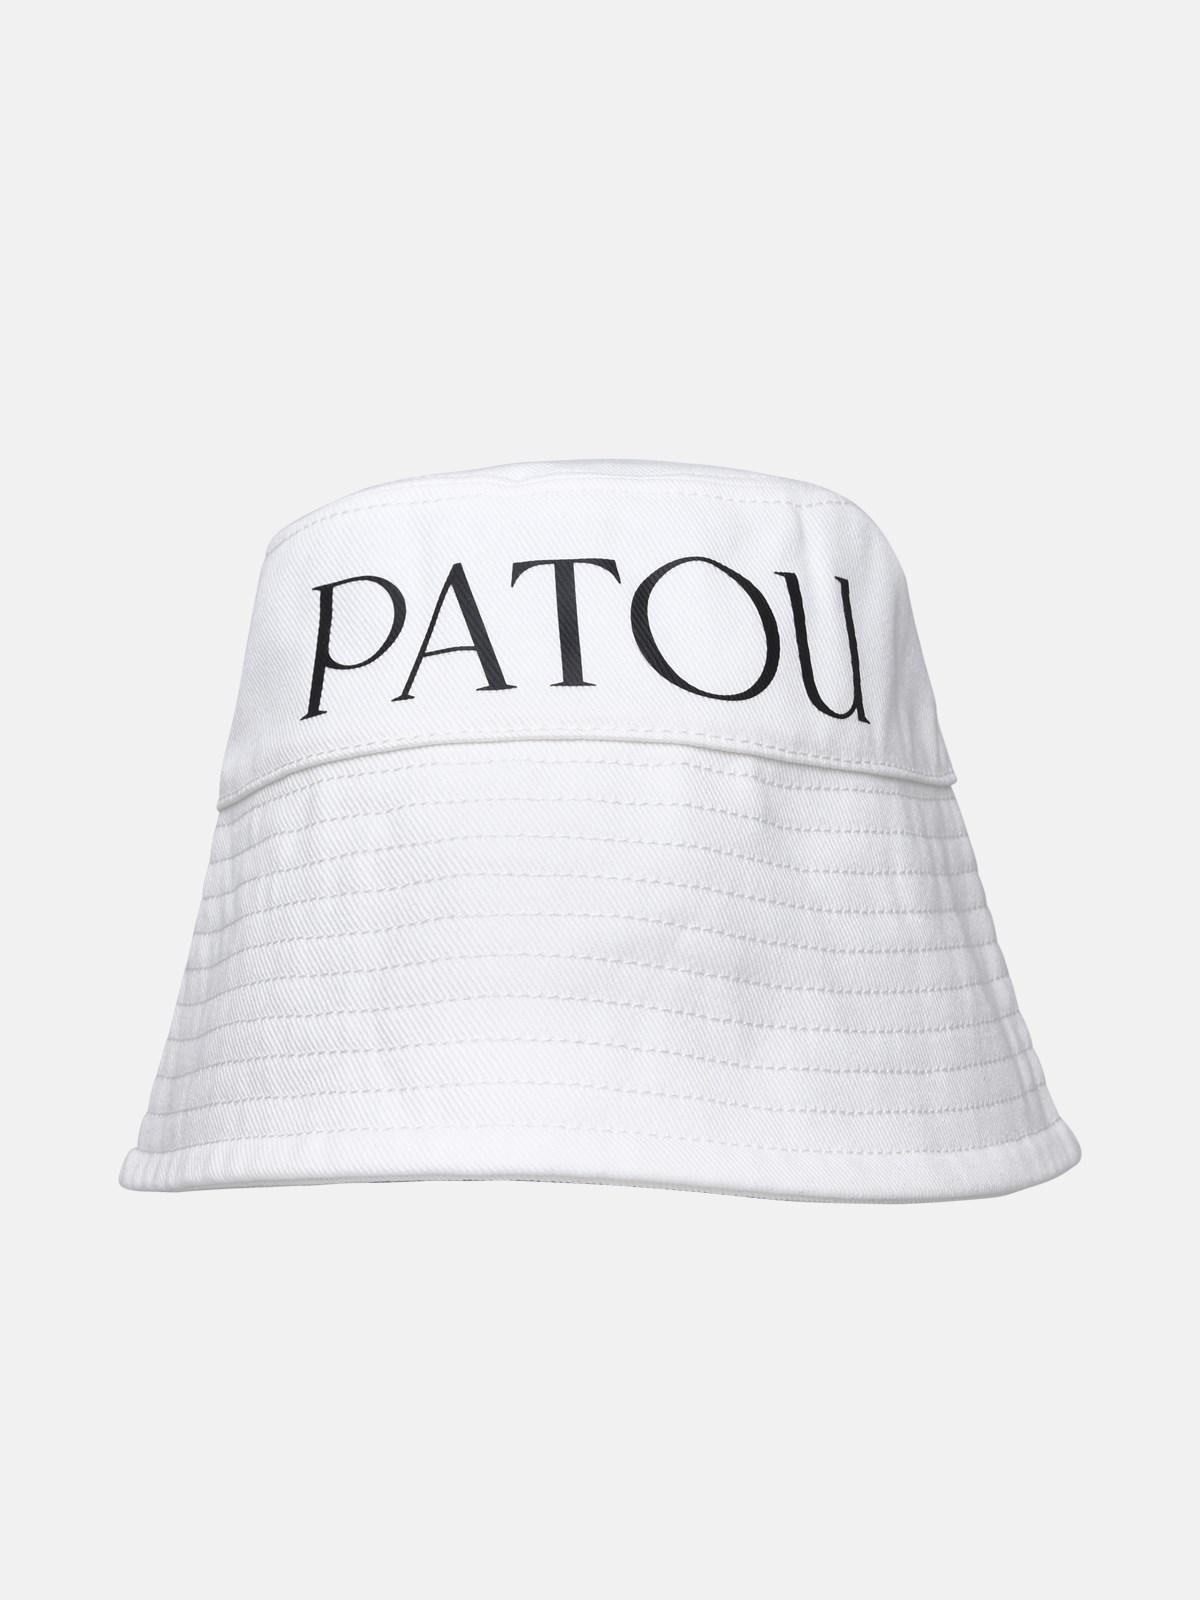 Patou White Cotton Cap